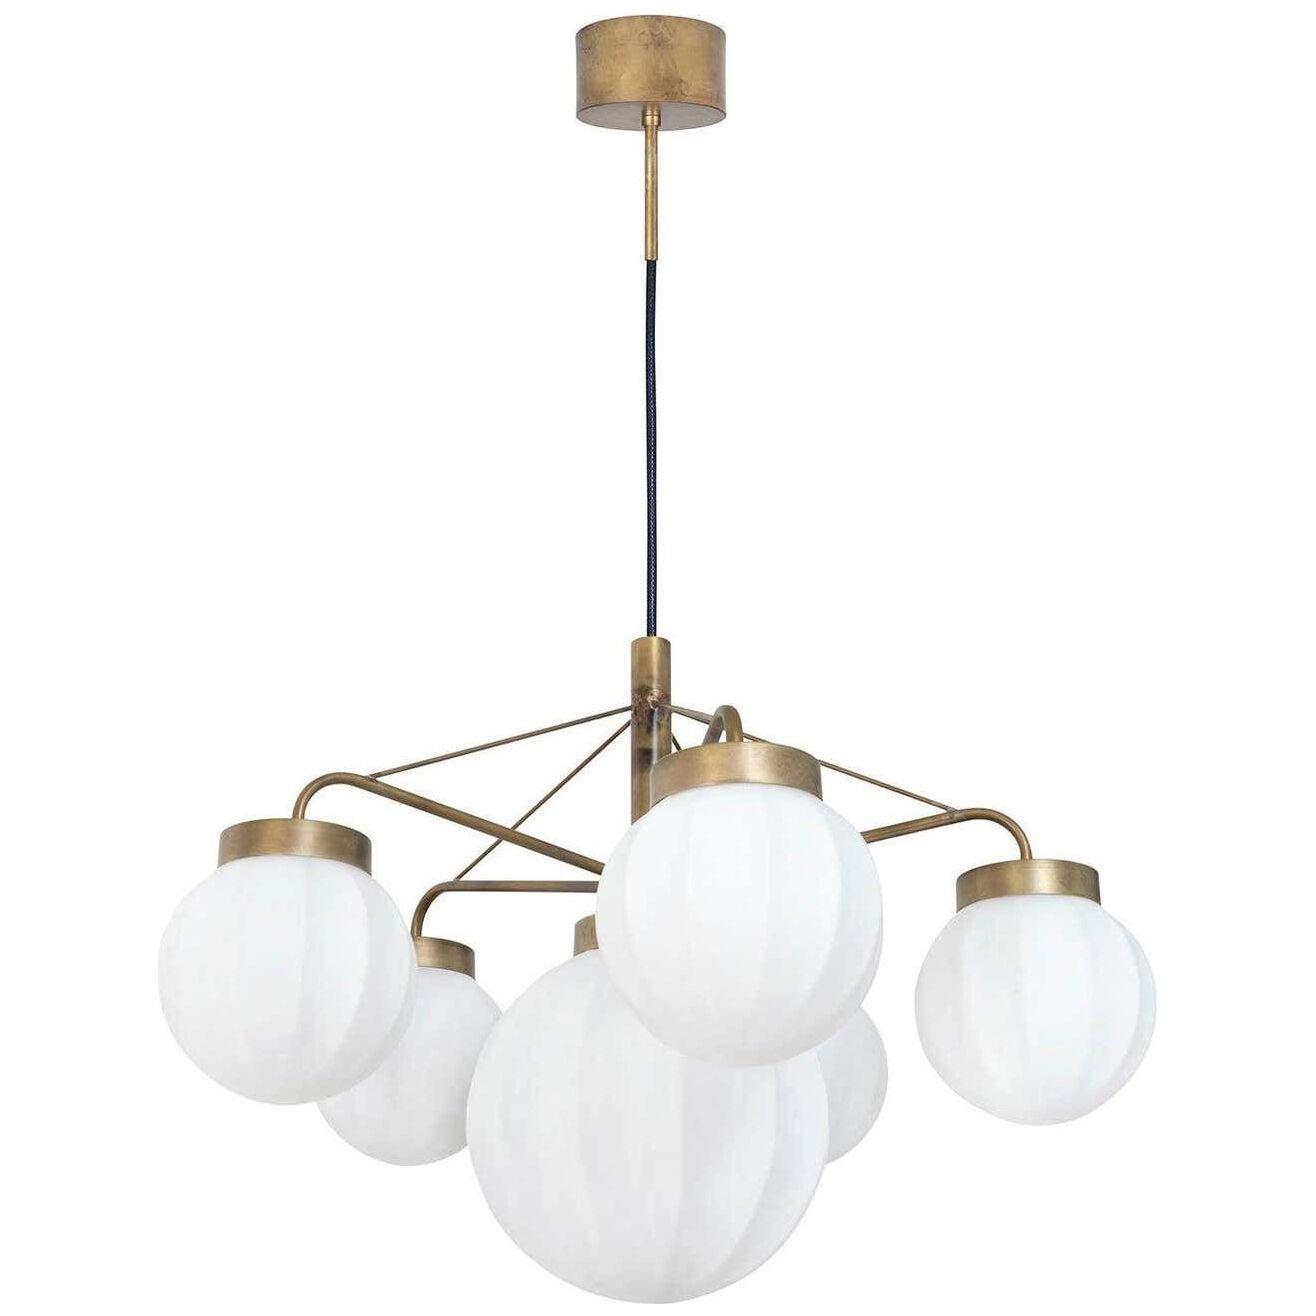 Johan Carpner Klyfta 6L Raw Brass Ceiling Lamp by Konsthantverk